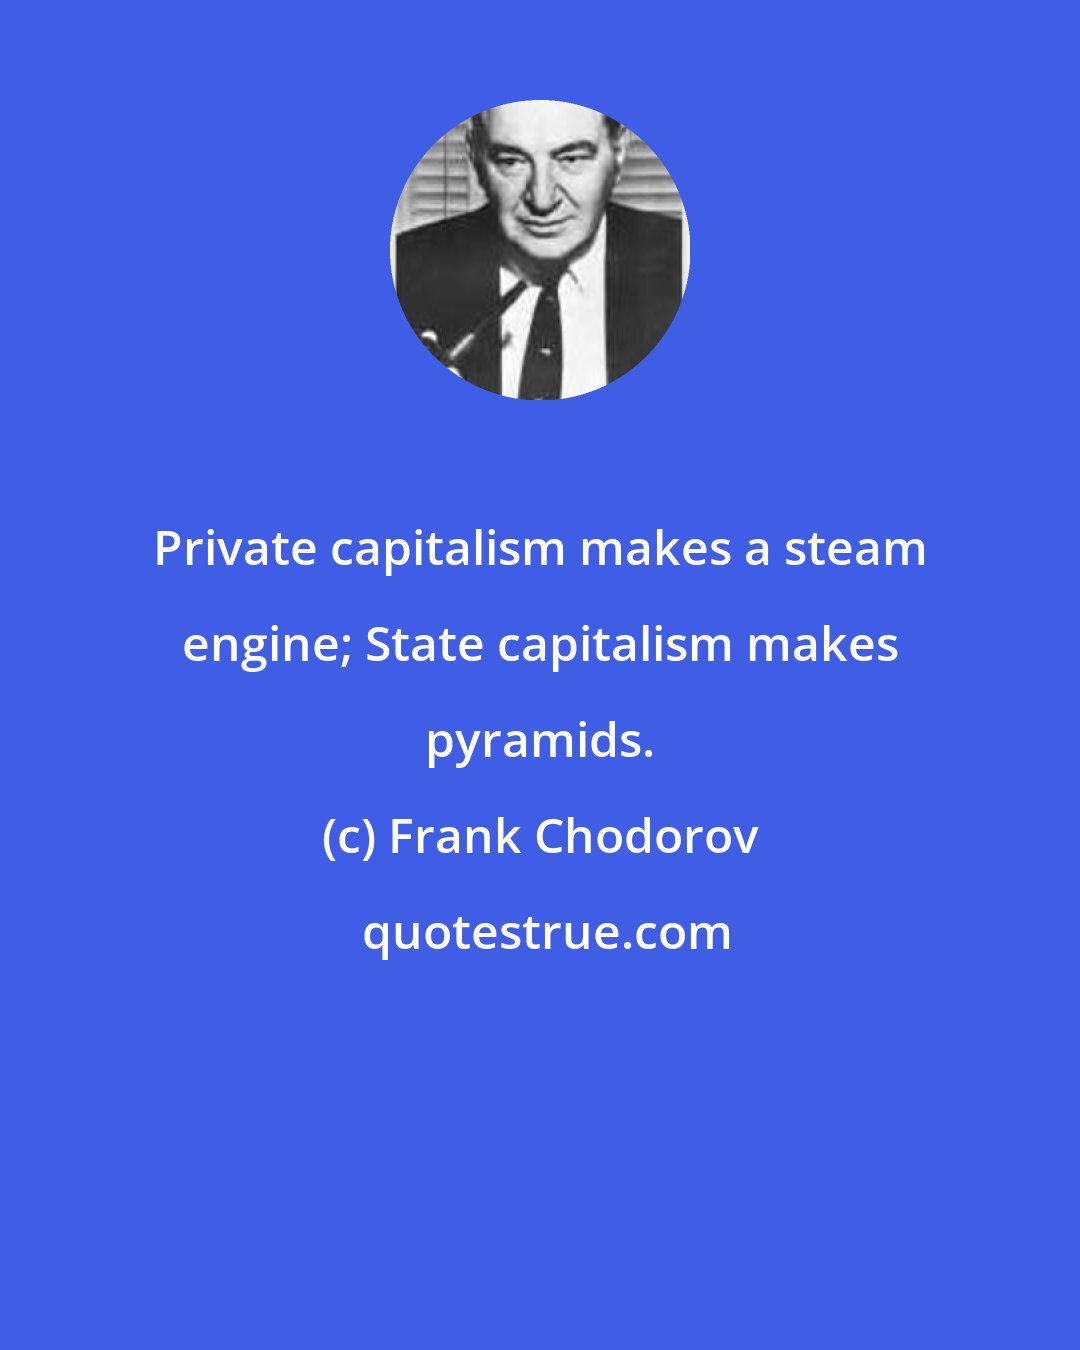 Frank Chodorov: Private capitalism makes a steam engine; State capitalism makes pyramids.